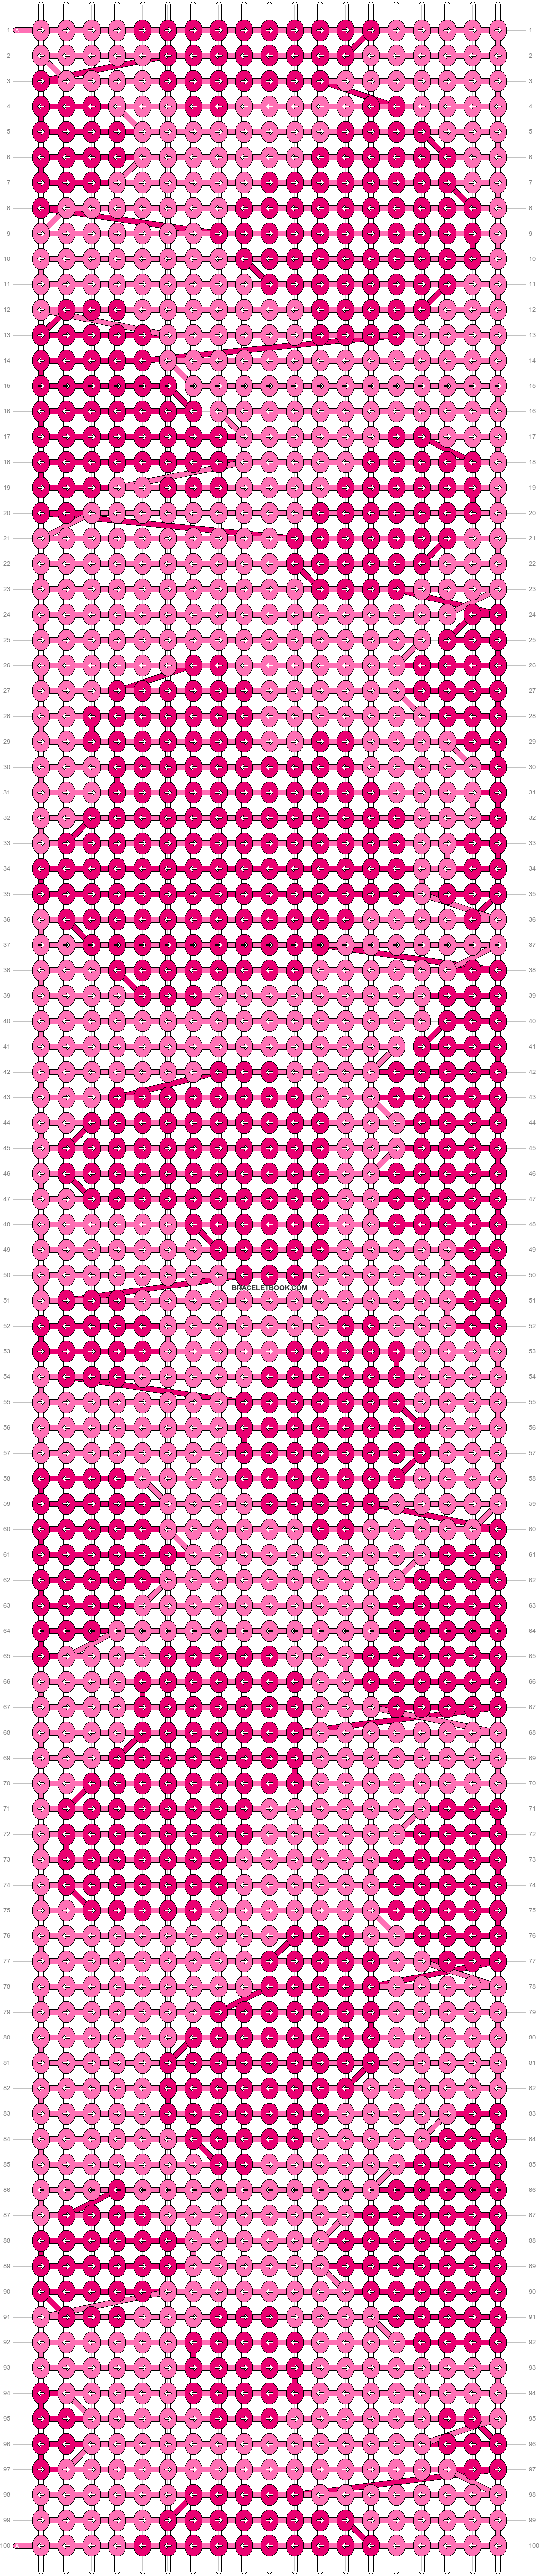 Alpha pattern #35069 variation #47391 pattern